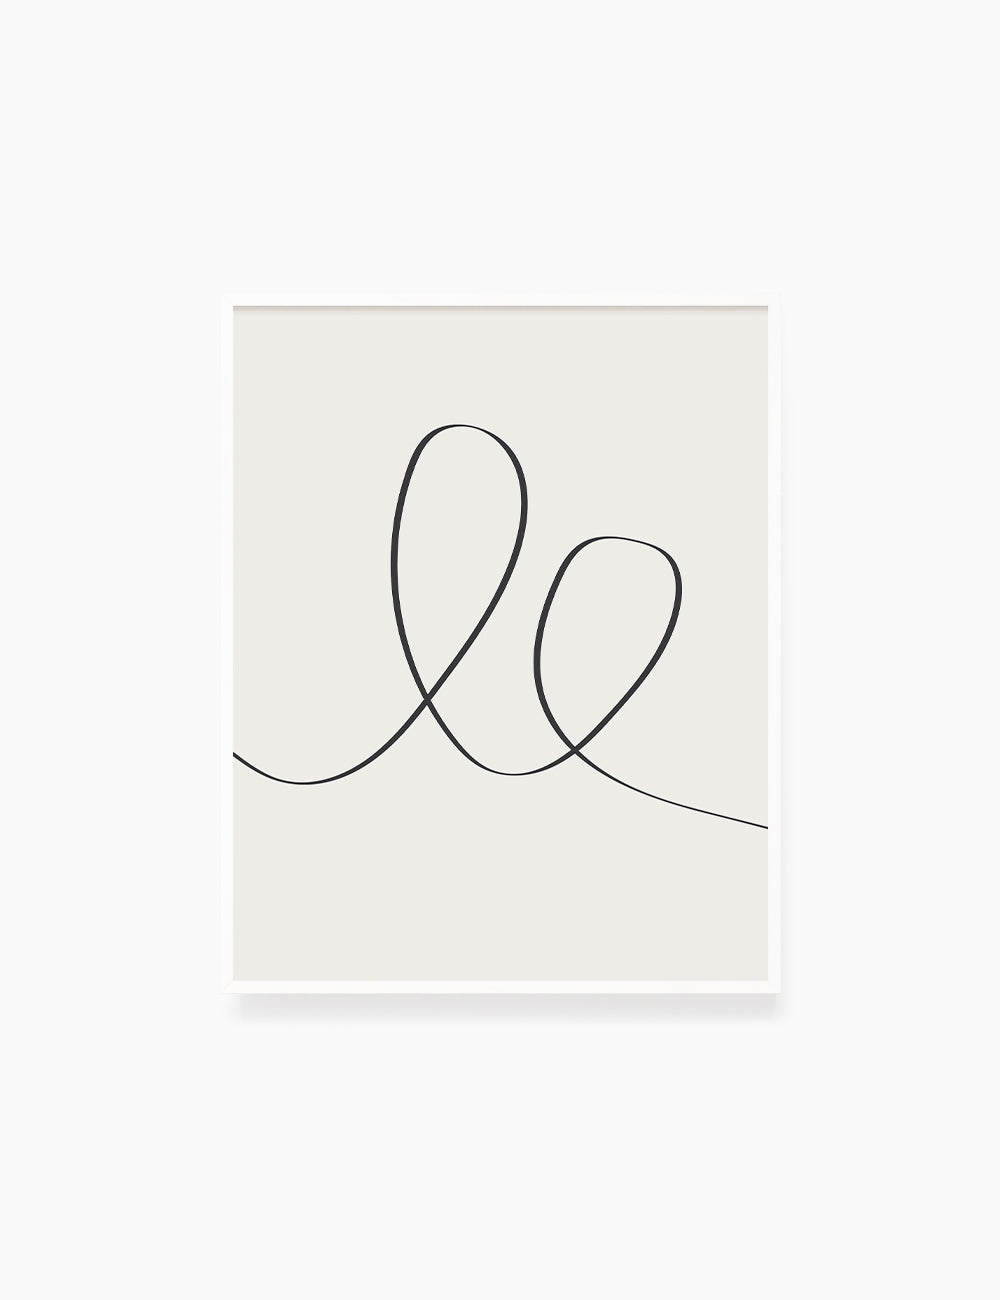 MINIMAL LINE ART. Abstract Heart Shape. Boho Aesthetic. Beige. Black. Printable Wall Art Illustration. - PAPER MOON Art & Design